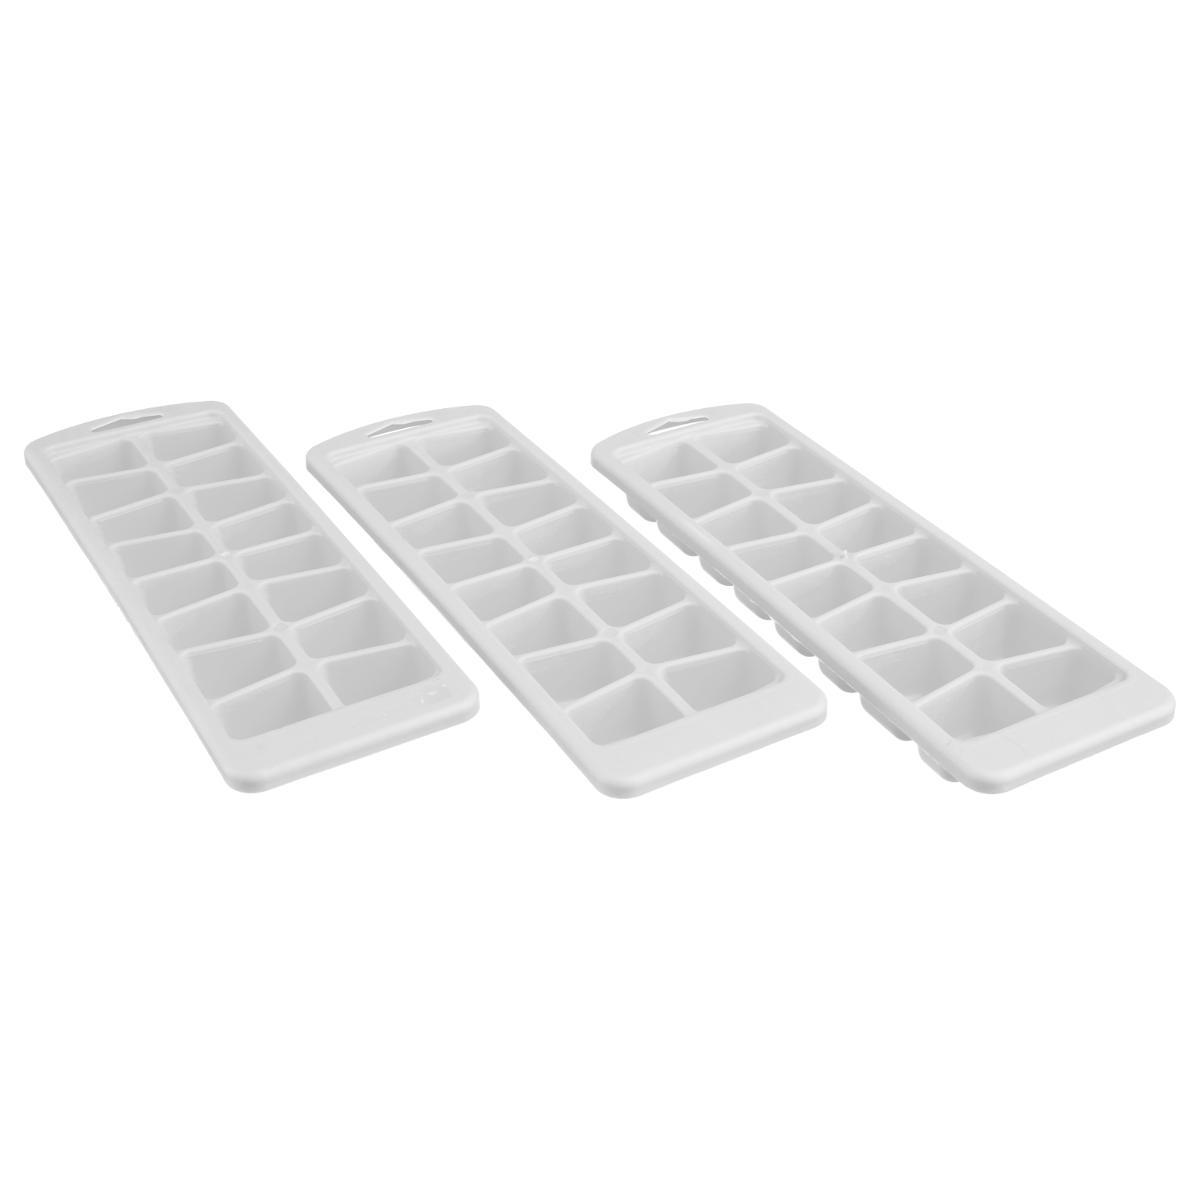 OGGI® Six Cube Ice Tray set of 2, Grey, 1 ct - Kroger